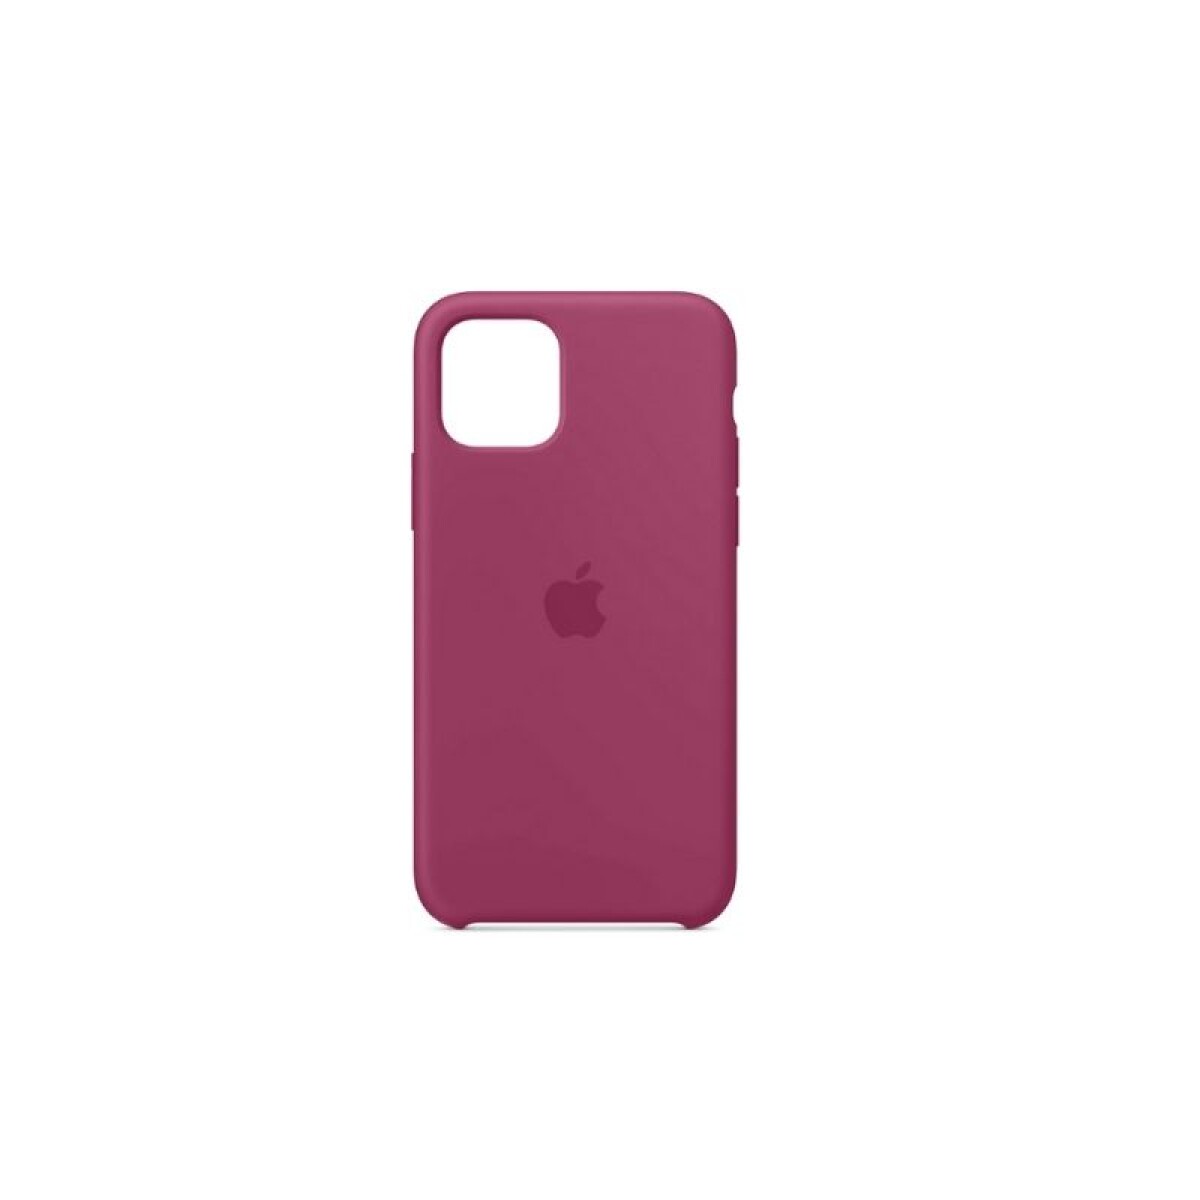 Protector original Apple para Iphone 11 rosado 